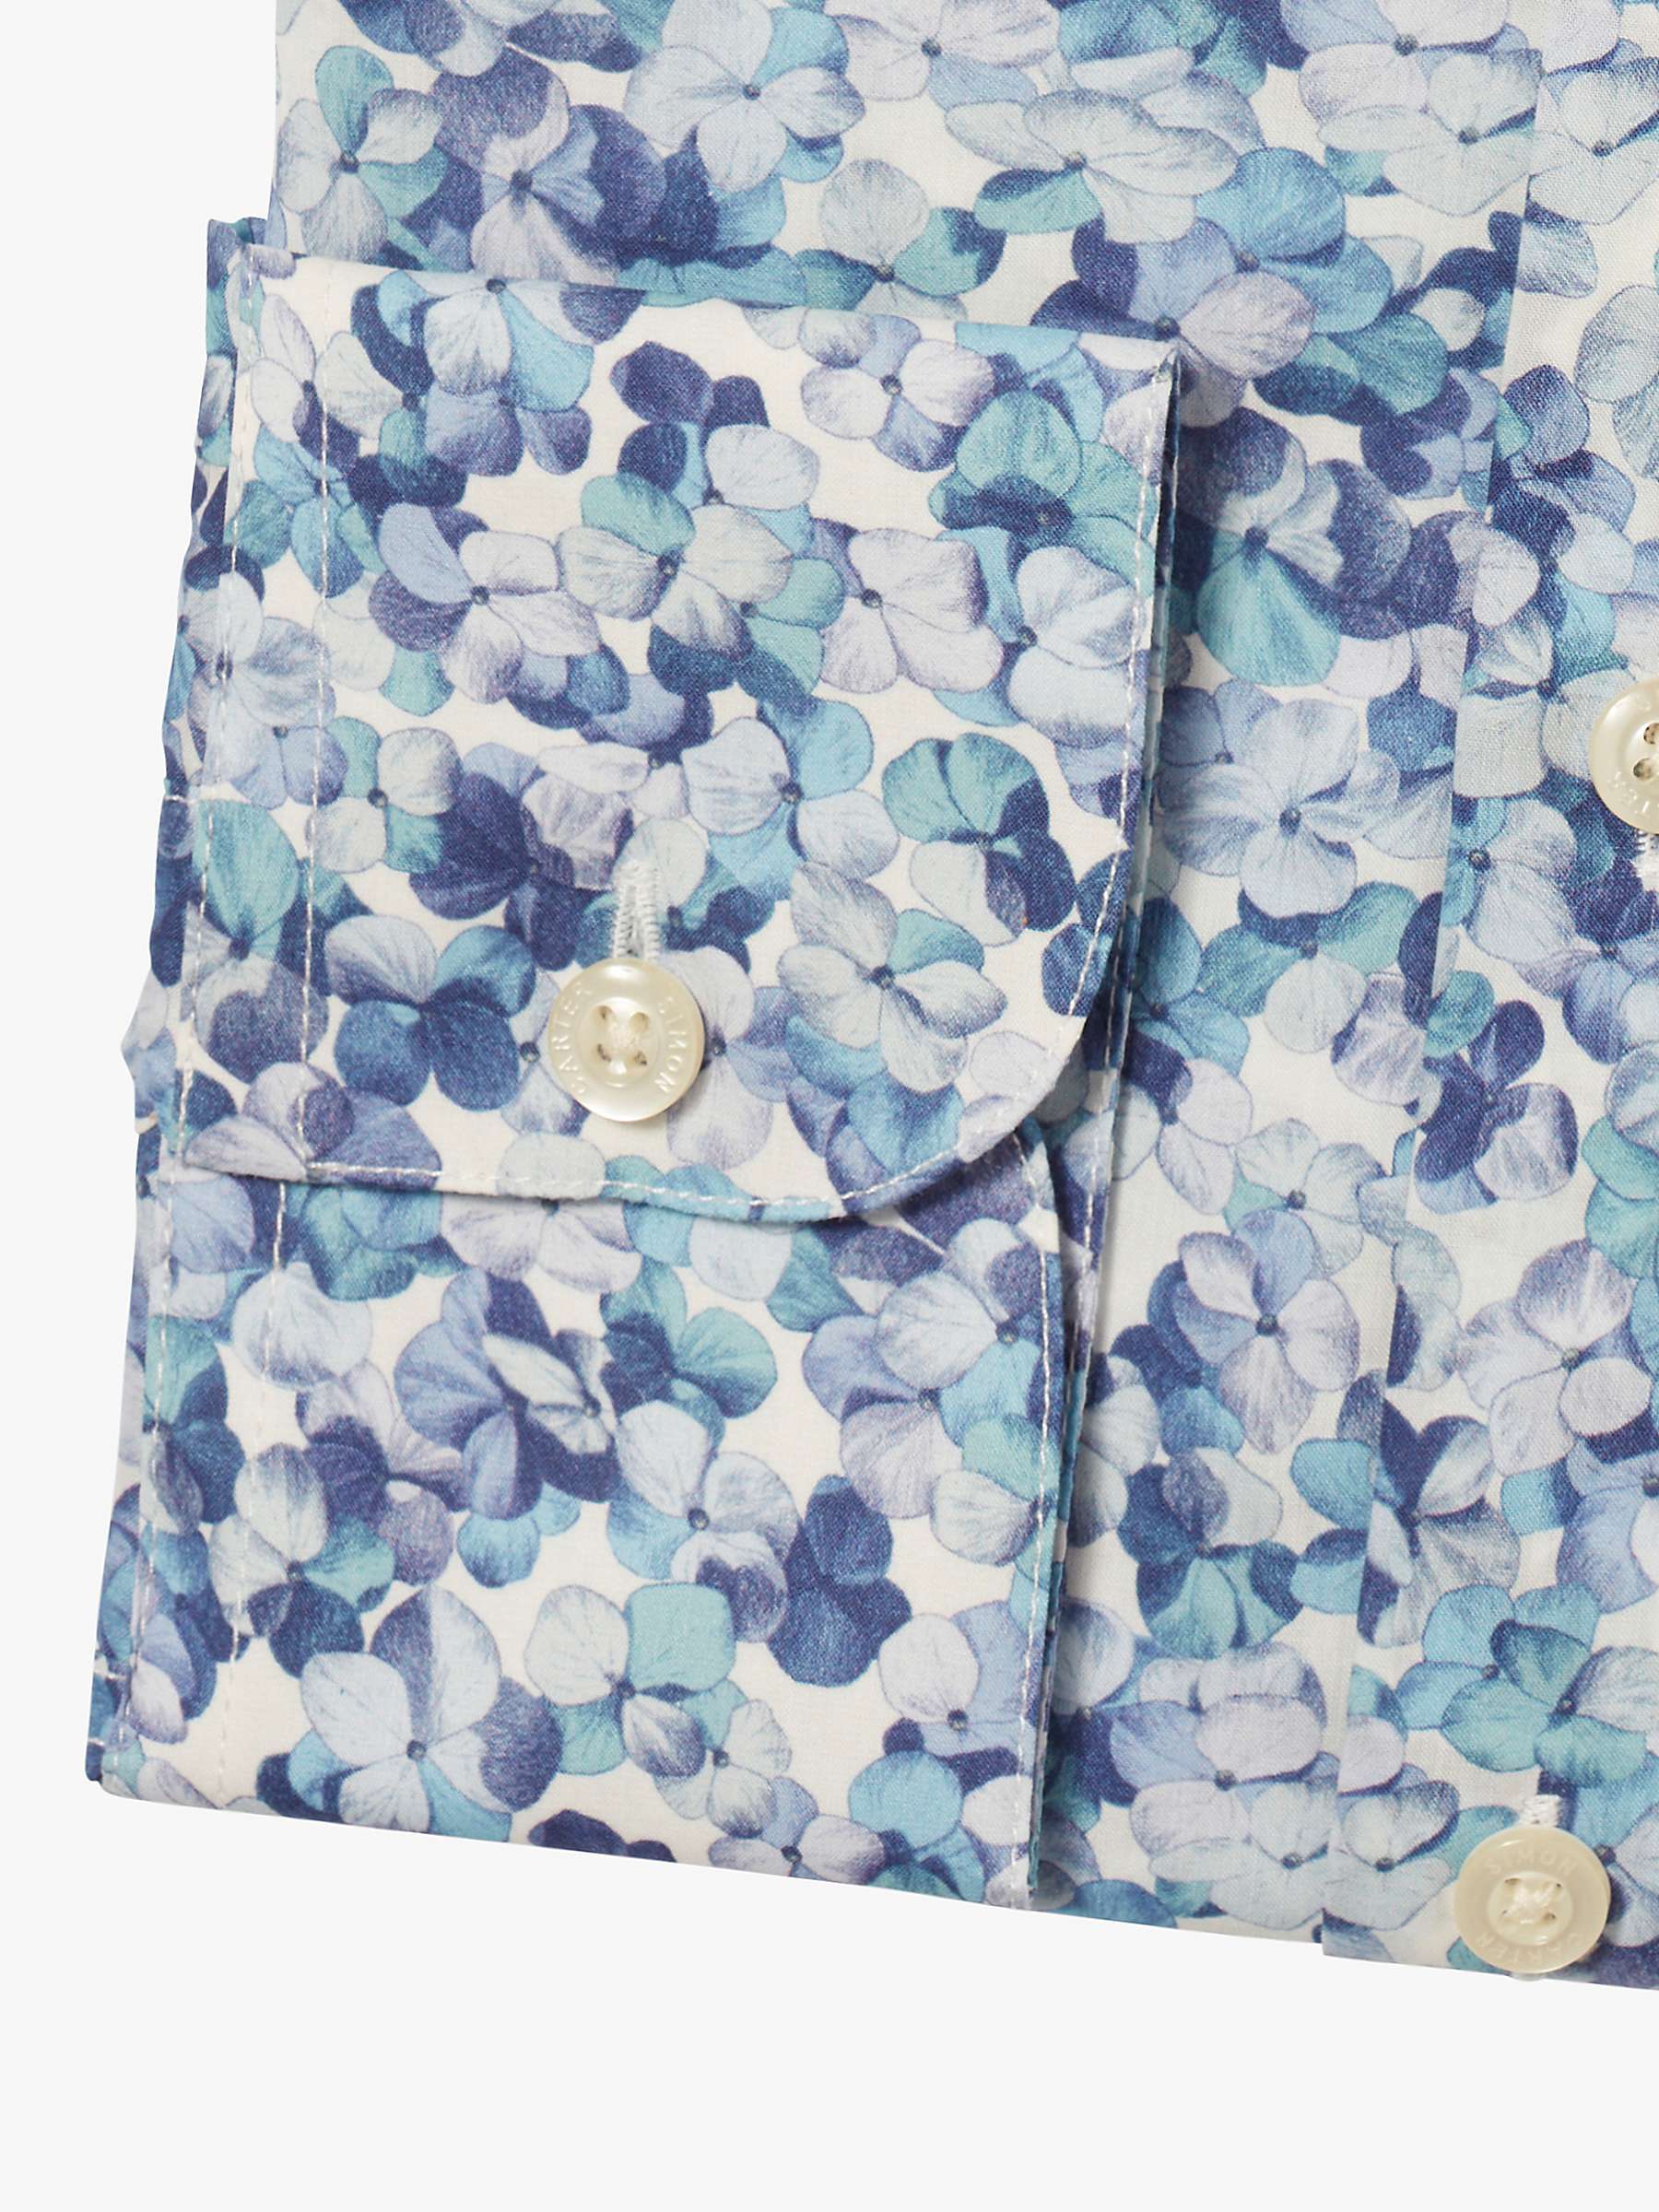 Buy Simon Carter Liberty Fabric Hilary Ann Regular Fit Shirt, Blue/White Online at johnlewis.com